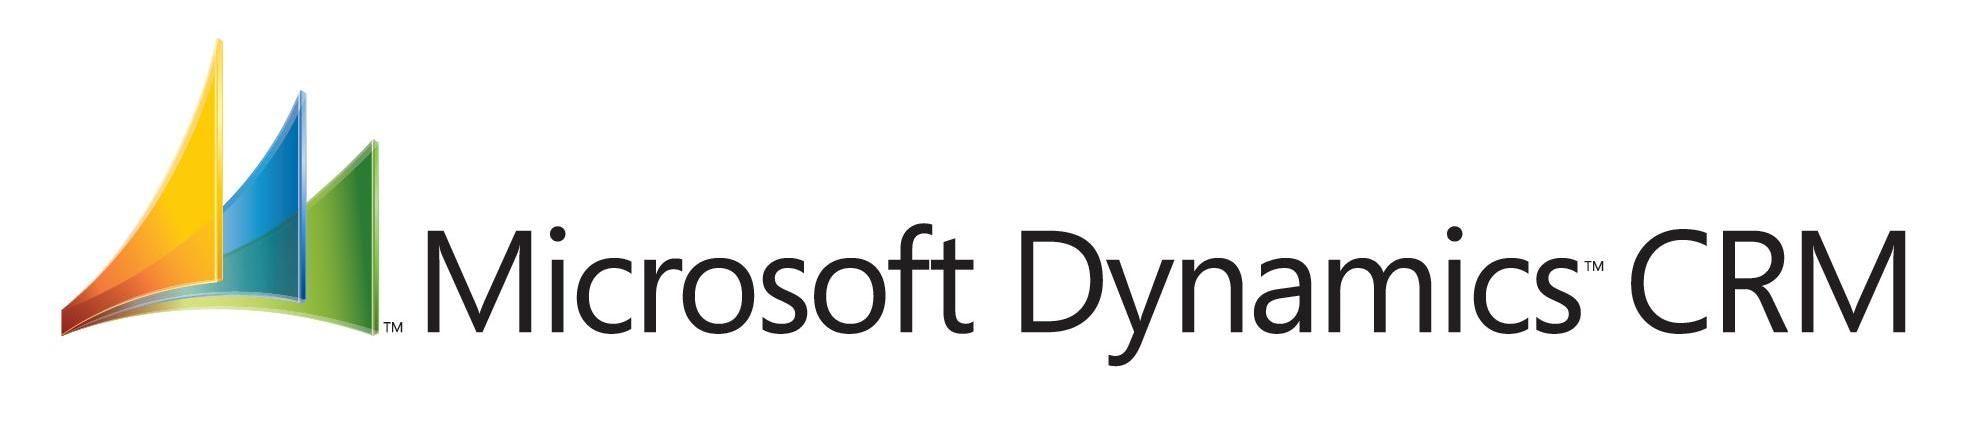 MS Dynamics CRM Logo - Microsoft Dynamics Customization & CRM Development | Techloyce